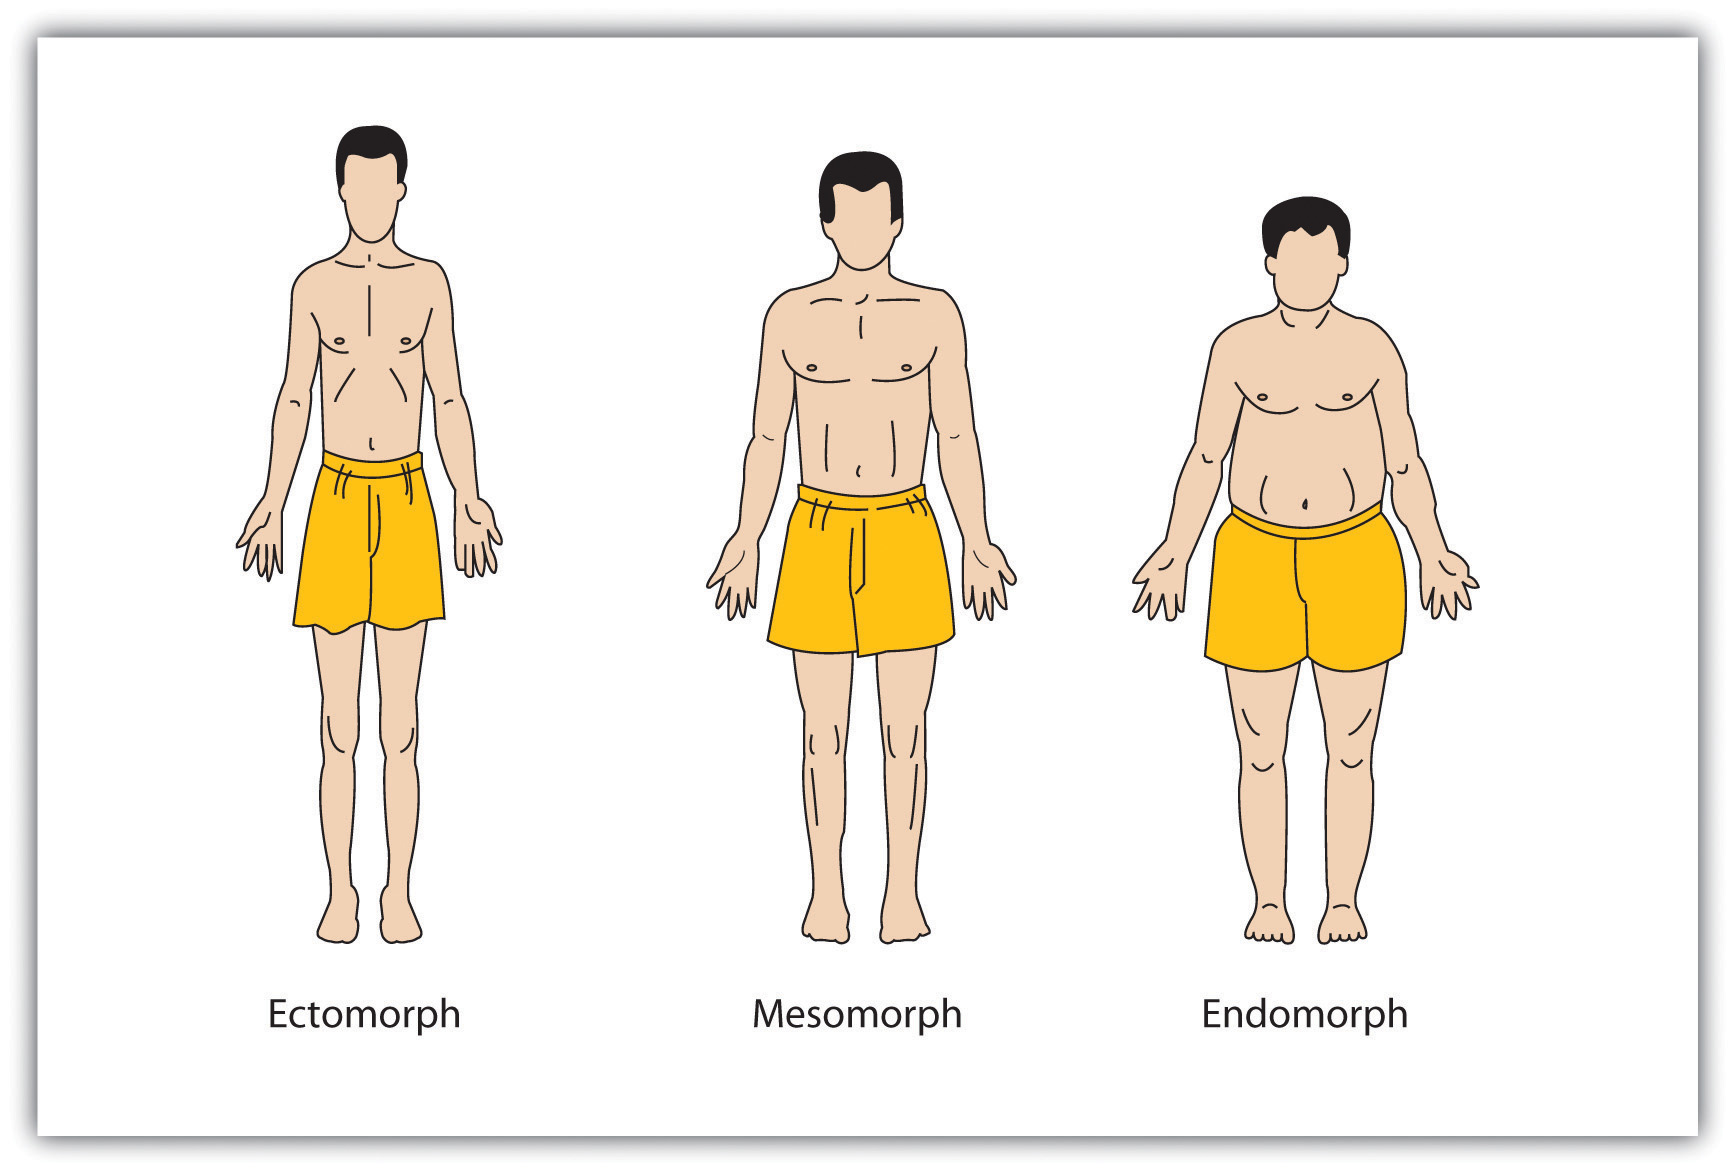 This diagram illustrates three body types: ectomorph, mesomorph, and endomorph.